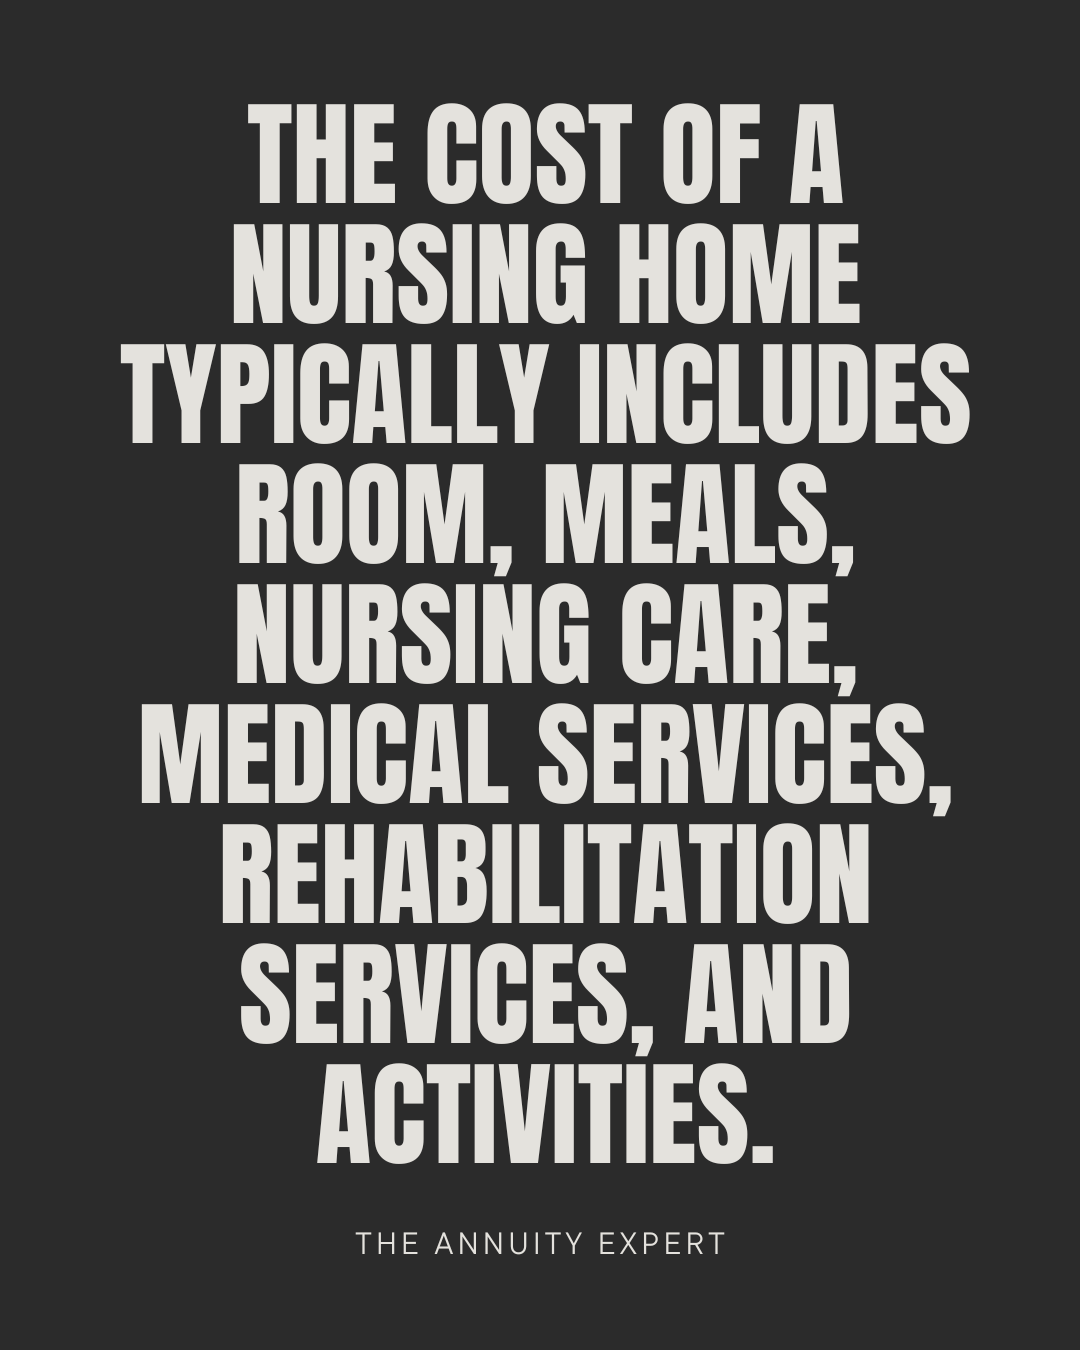 Nursing Homes Include